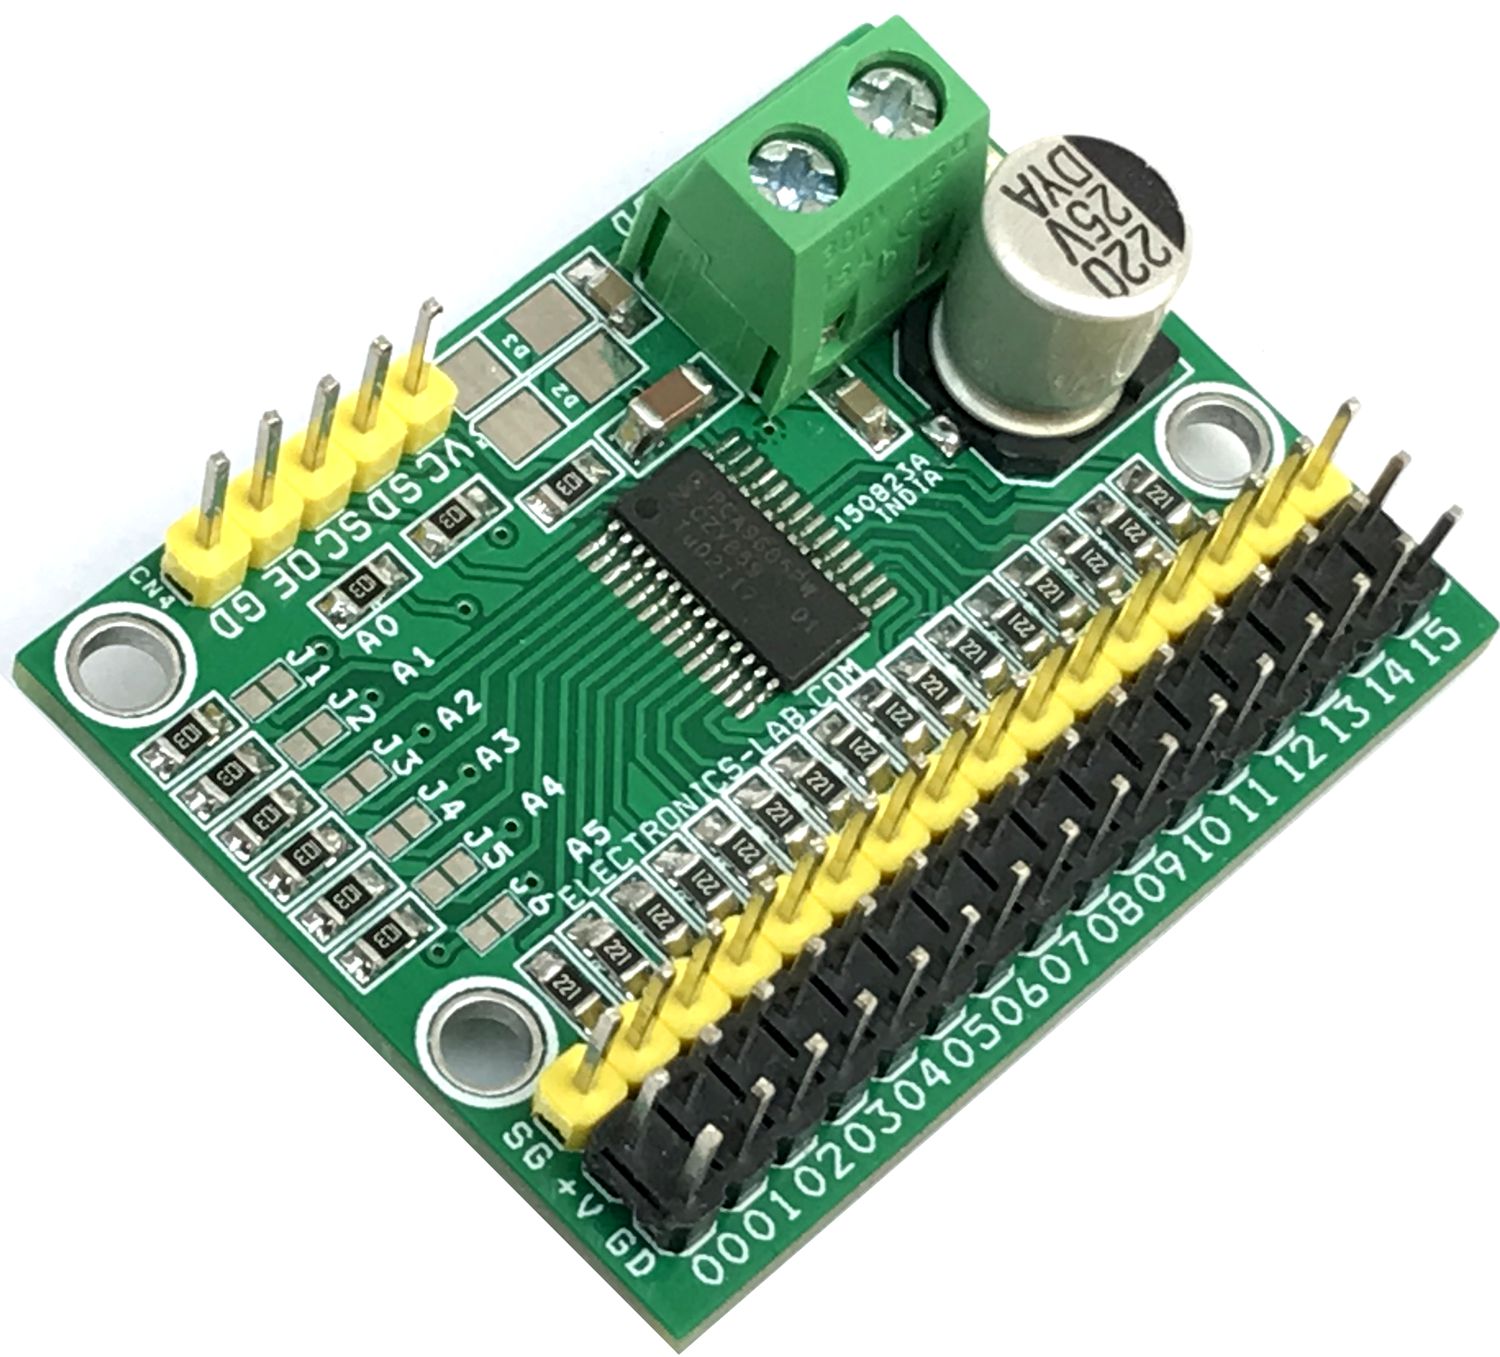 008 - Electronics-Lab.com